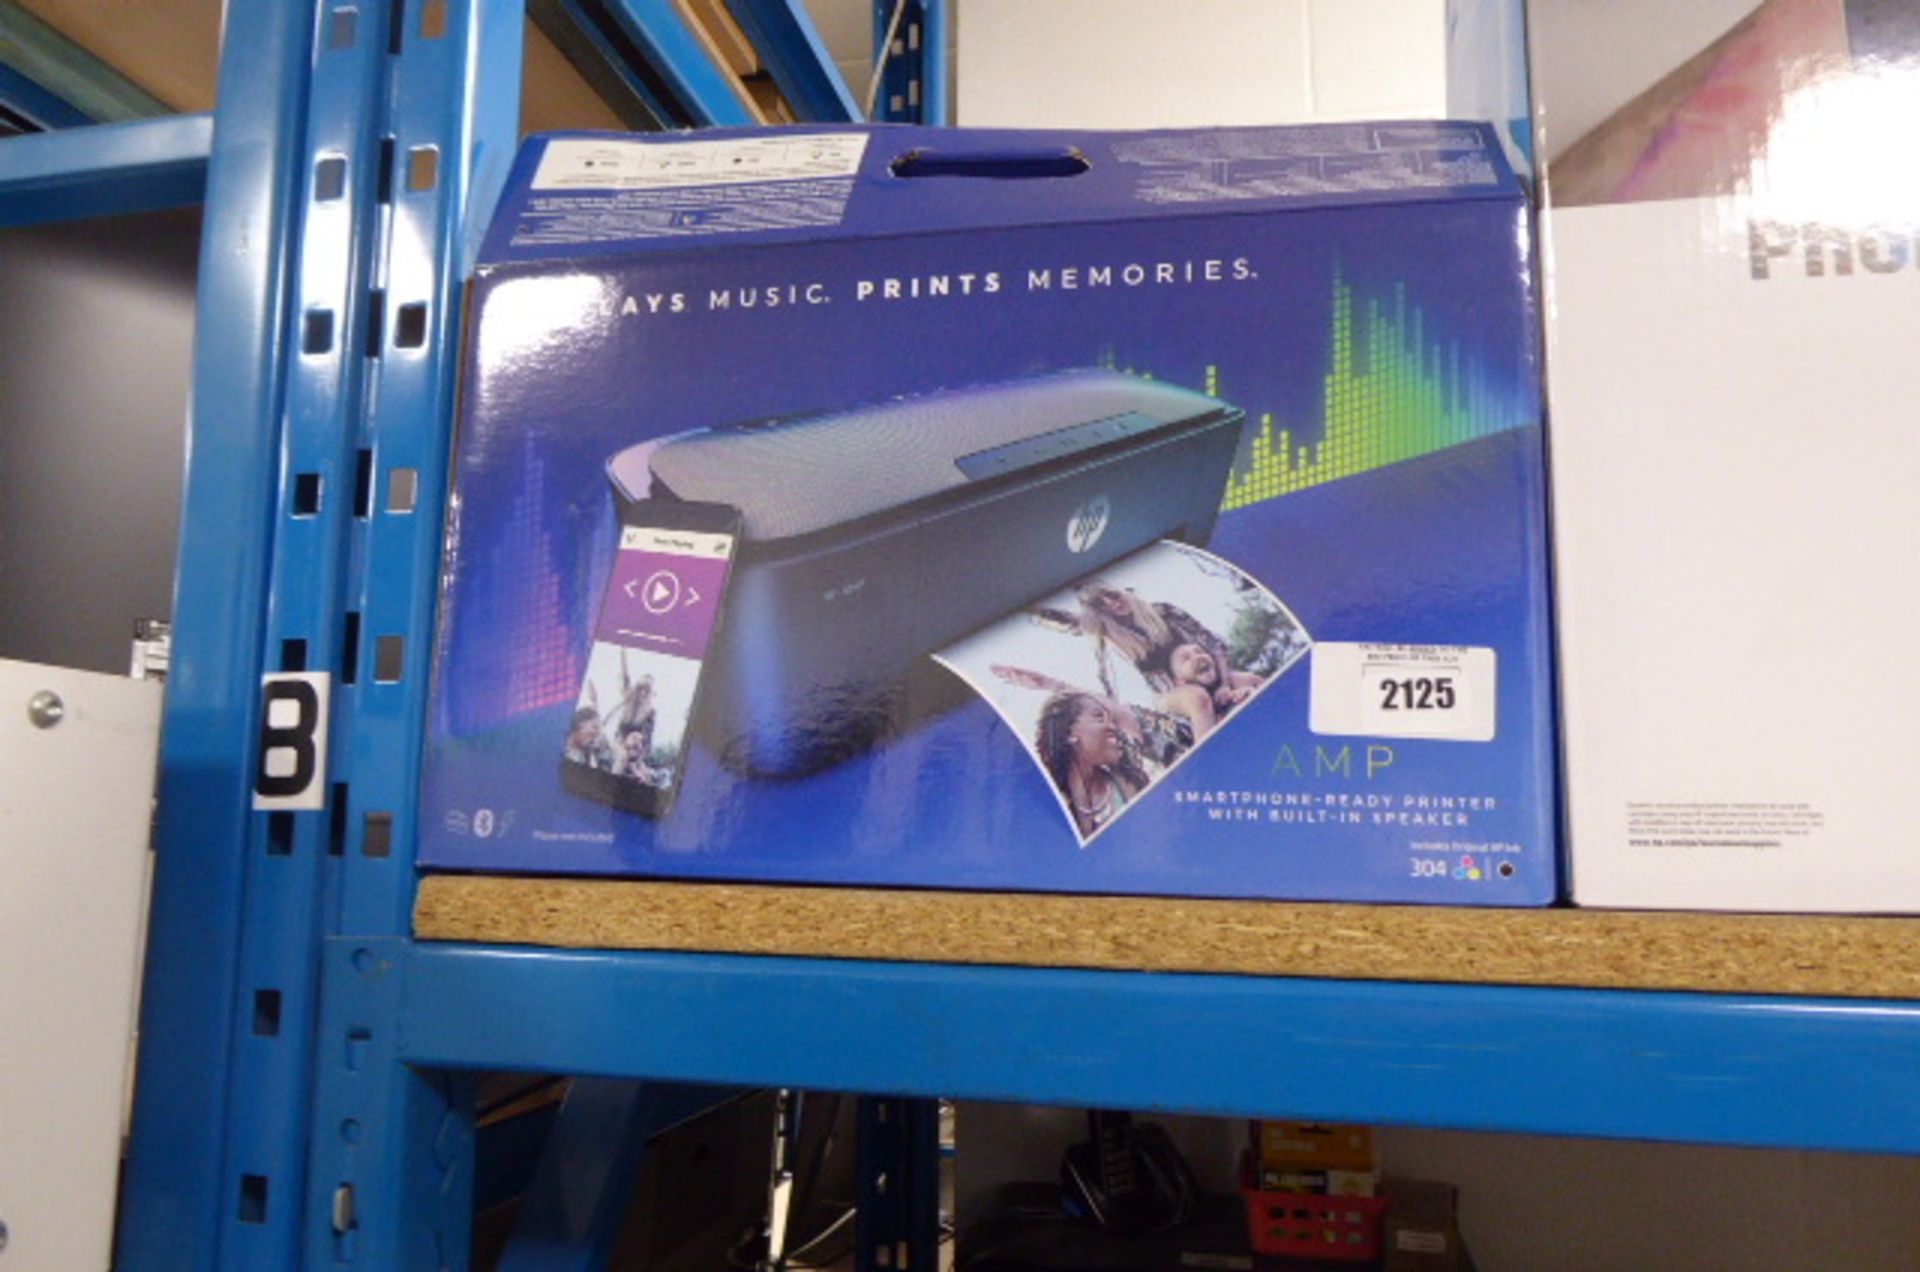 HP Amp blu-tooth audio printer in box